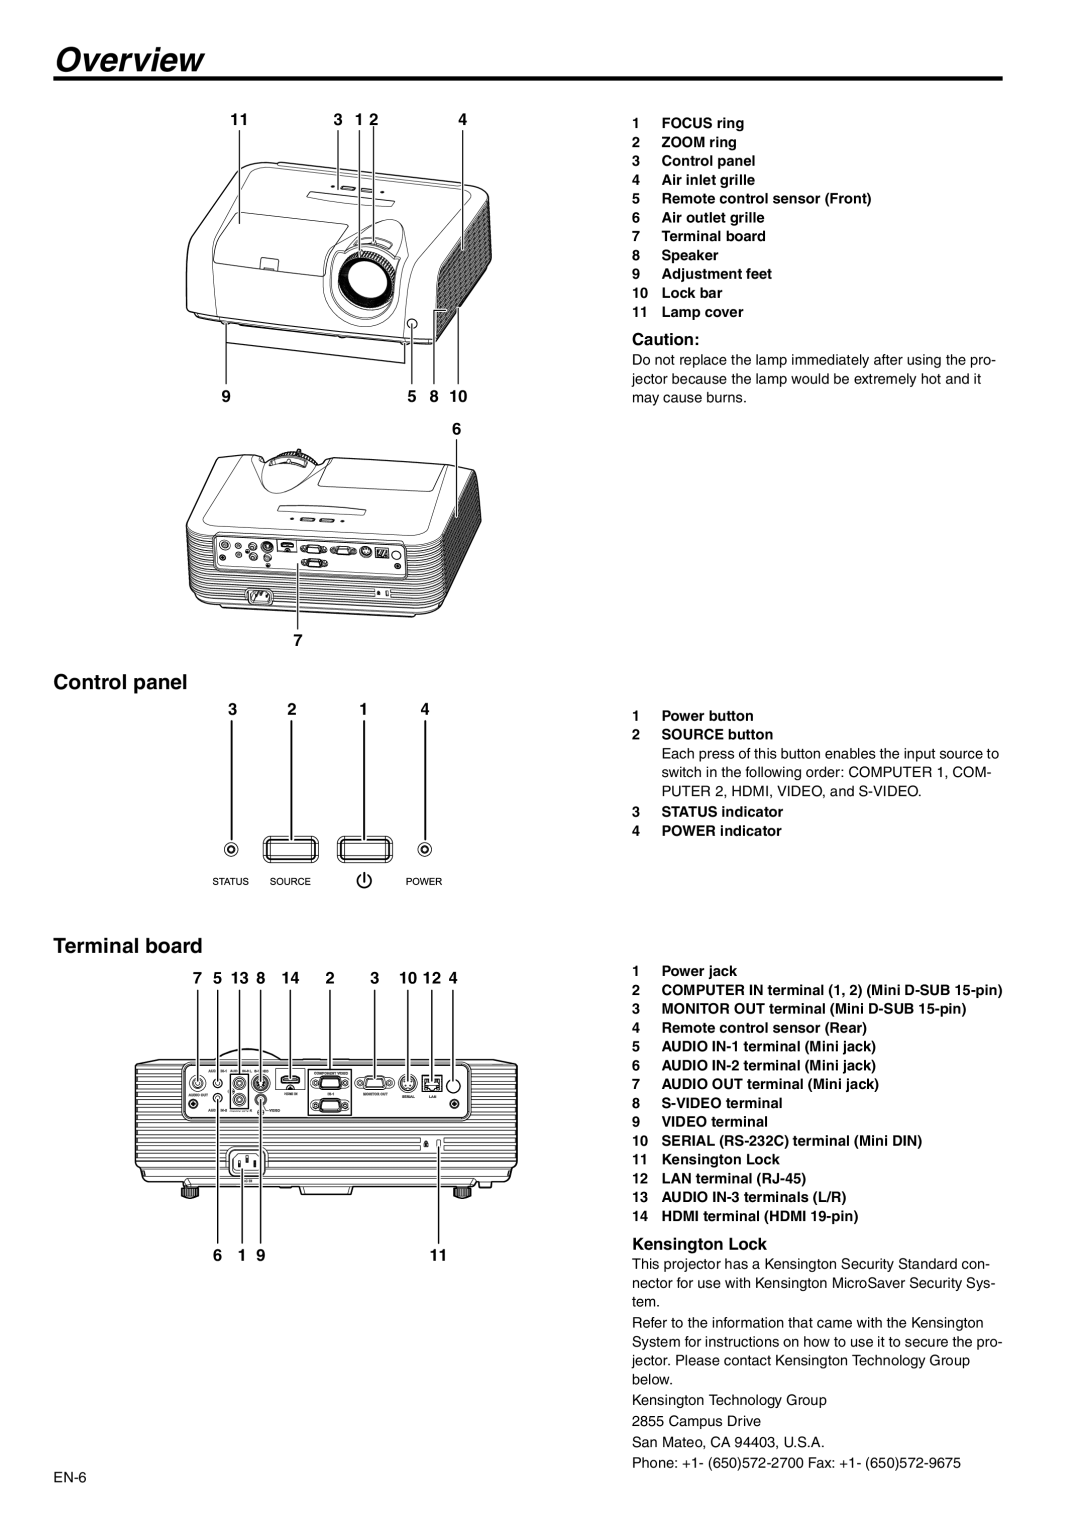 Mitsubishi Electronics XD280U-G, XD250U-G Overview, Control panel, Terminal board, 3 2 1, 5 13, 10 12, Kensington Lock 